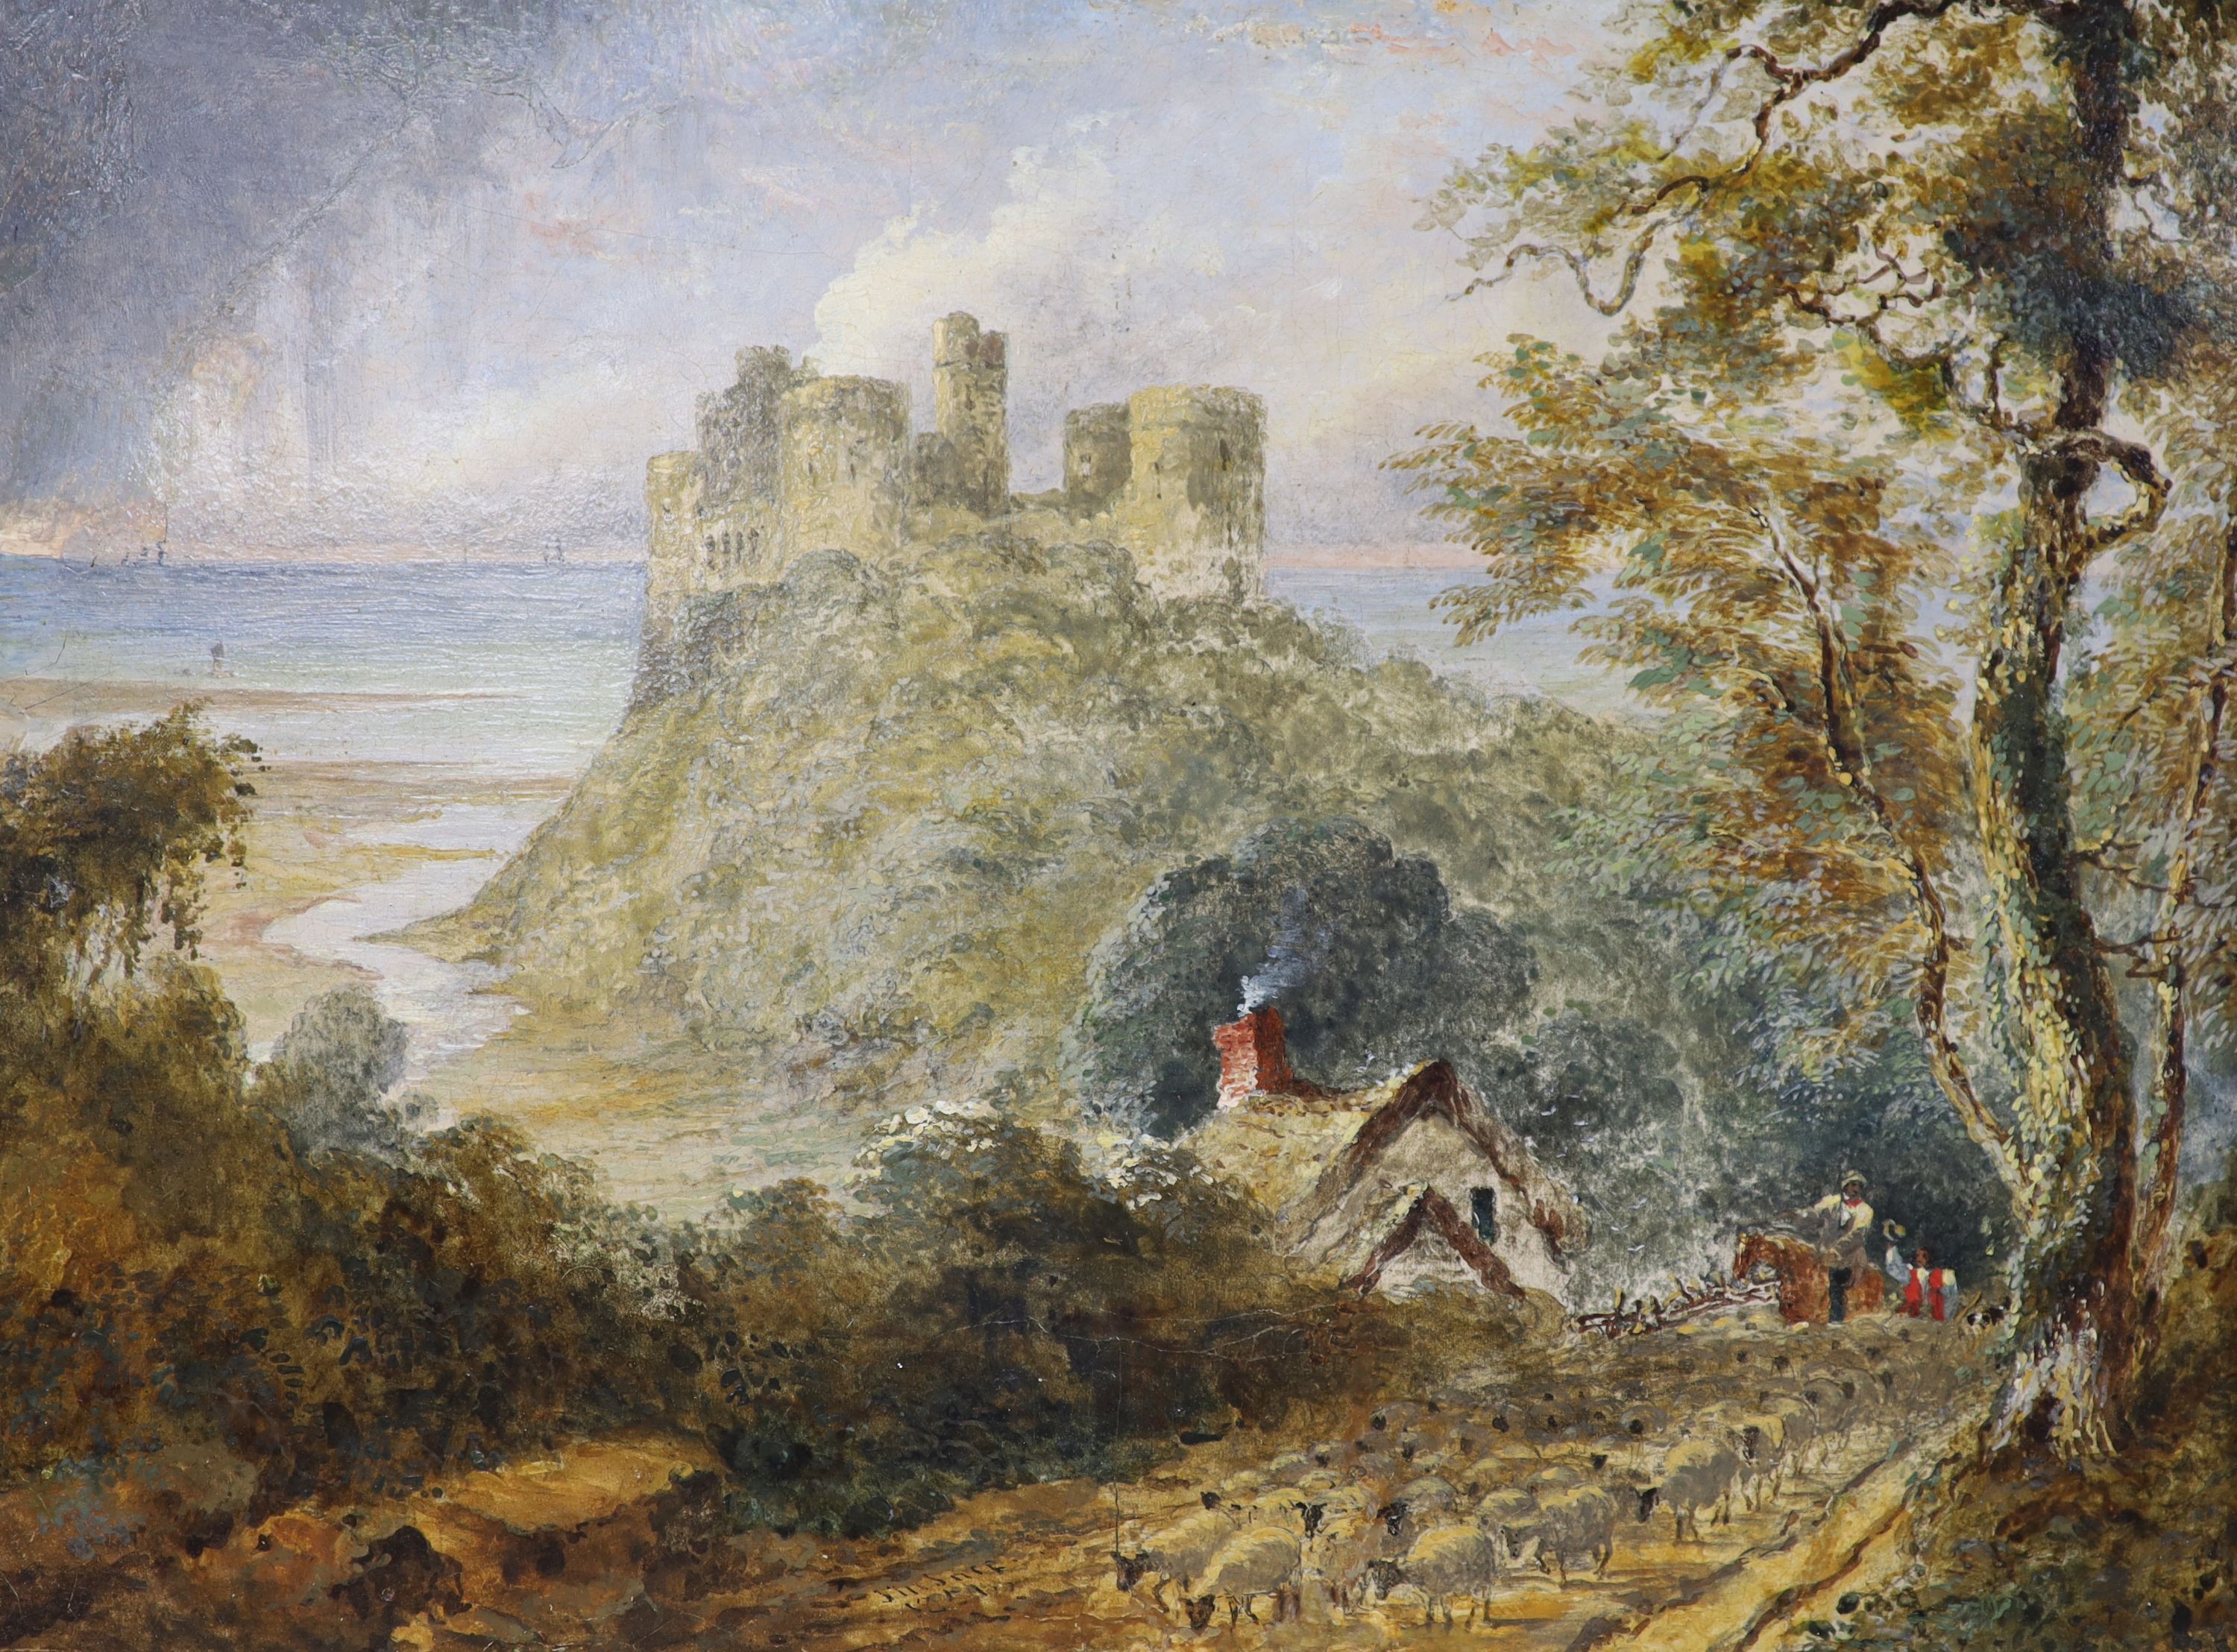 After Nasmyth, oil on canvas, coastal landscape with a castle, 30 x 40cm.